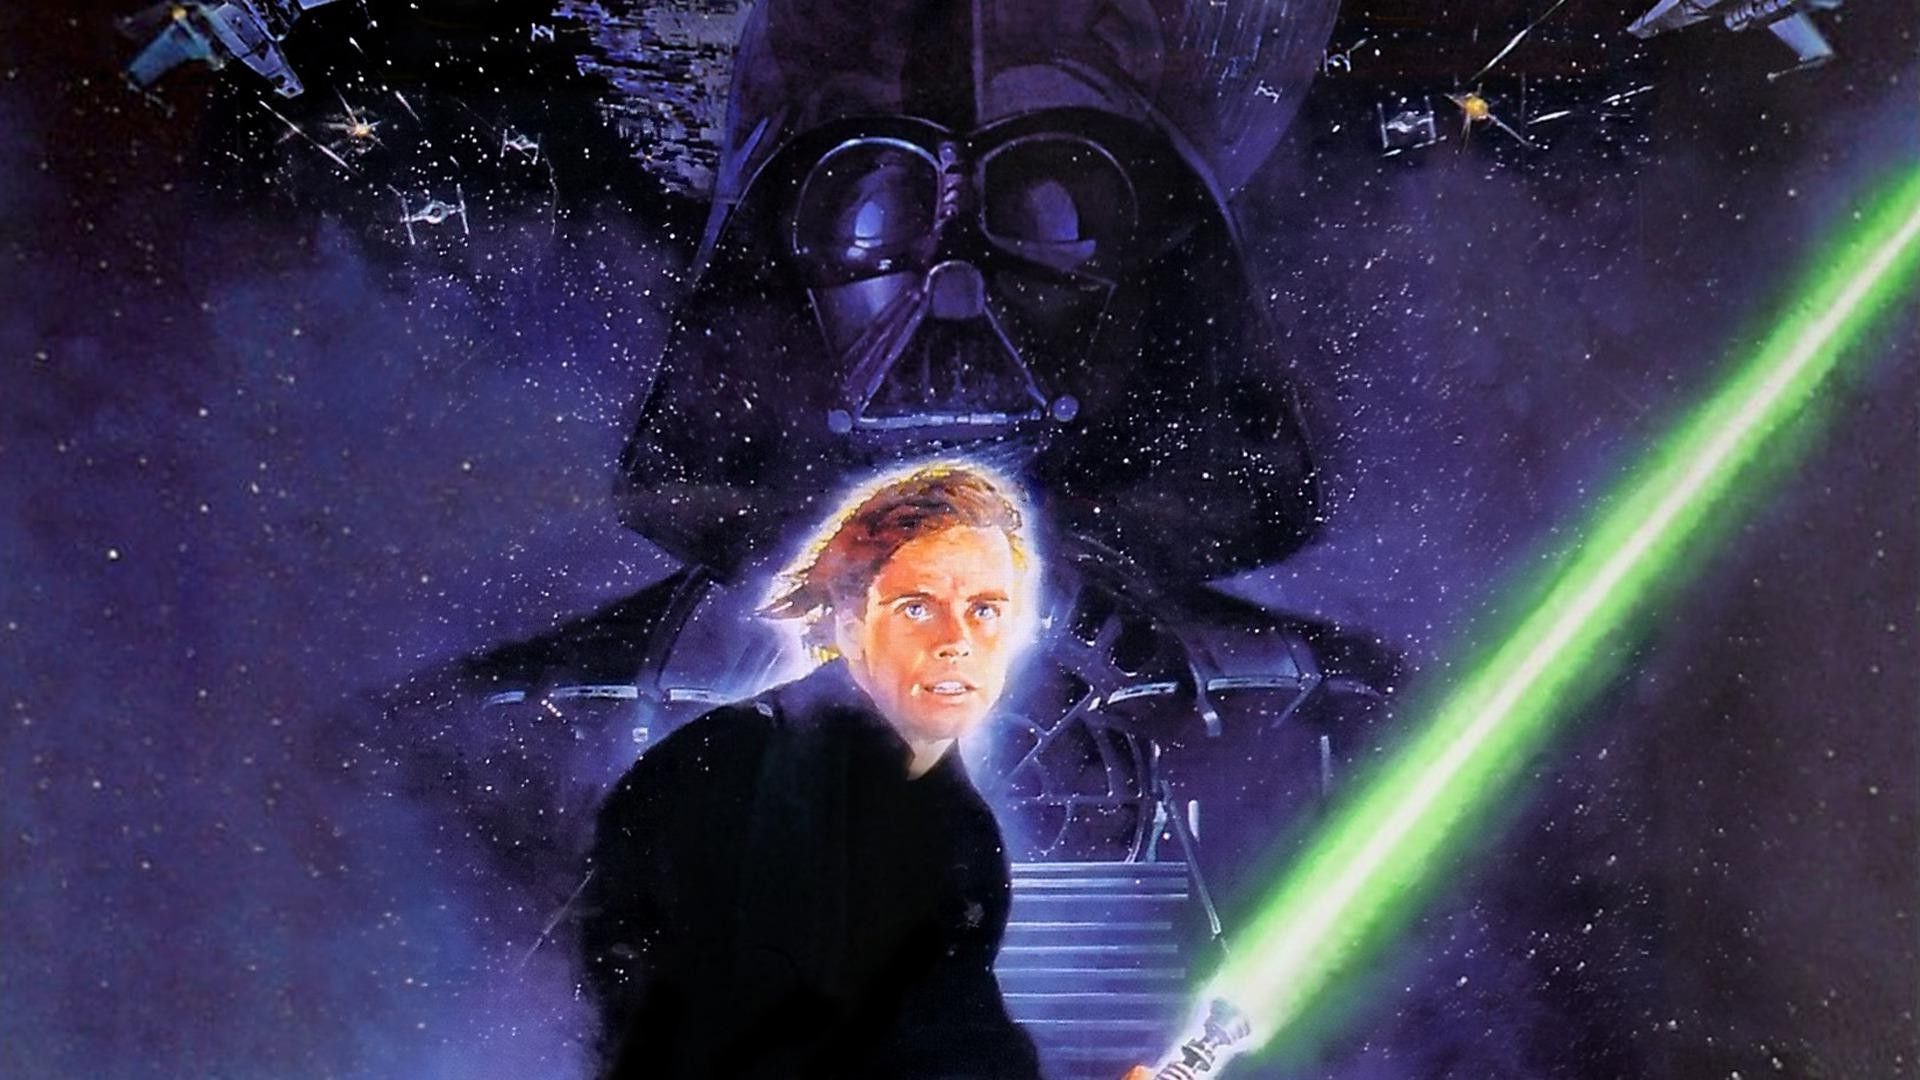 Skywalker Background. Luke Skywalker Wallpaper, Anakin Skywalker Wallpaper and LEGO Luke Skywalker Wallpaper